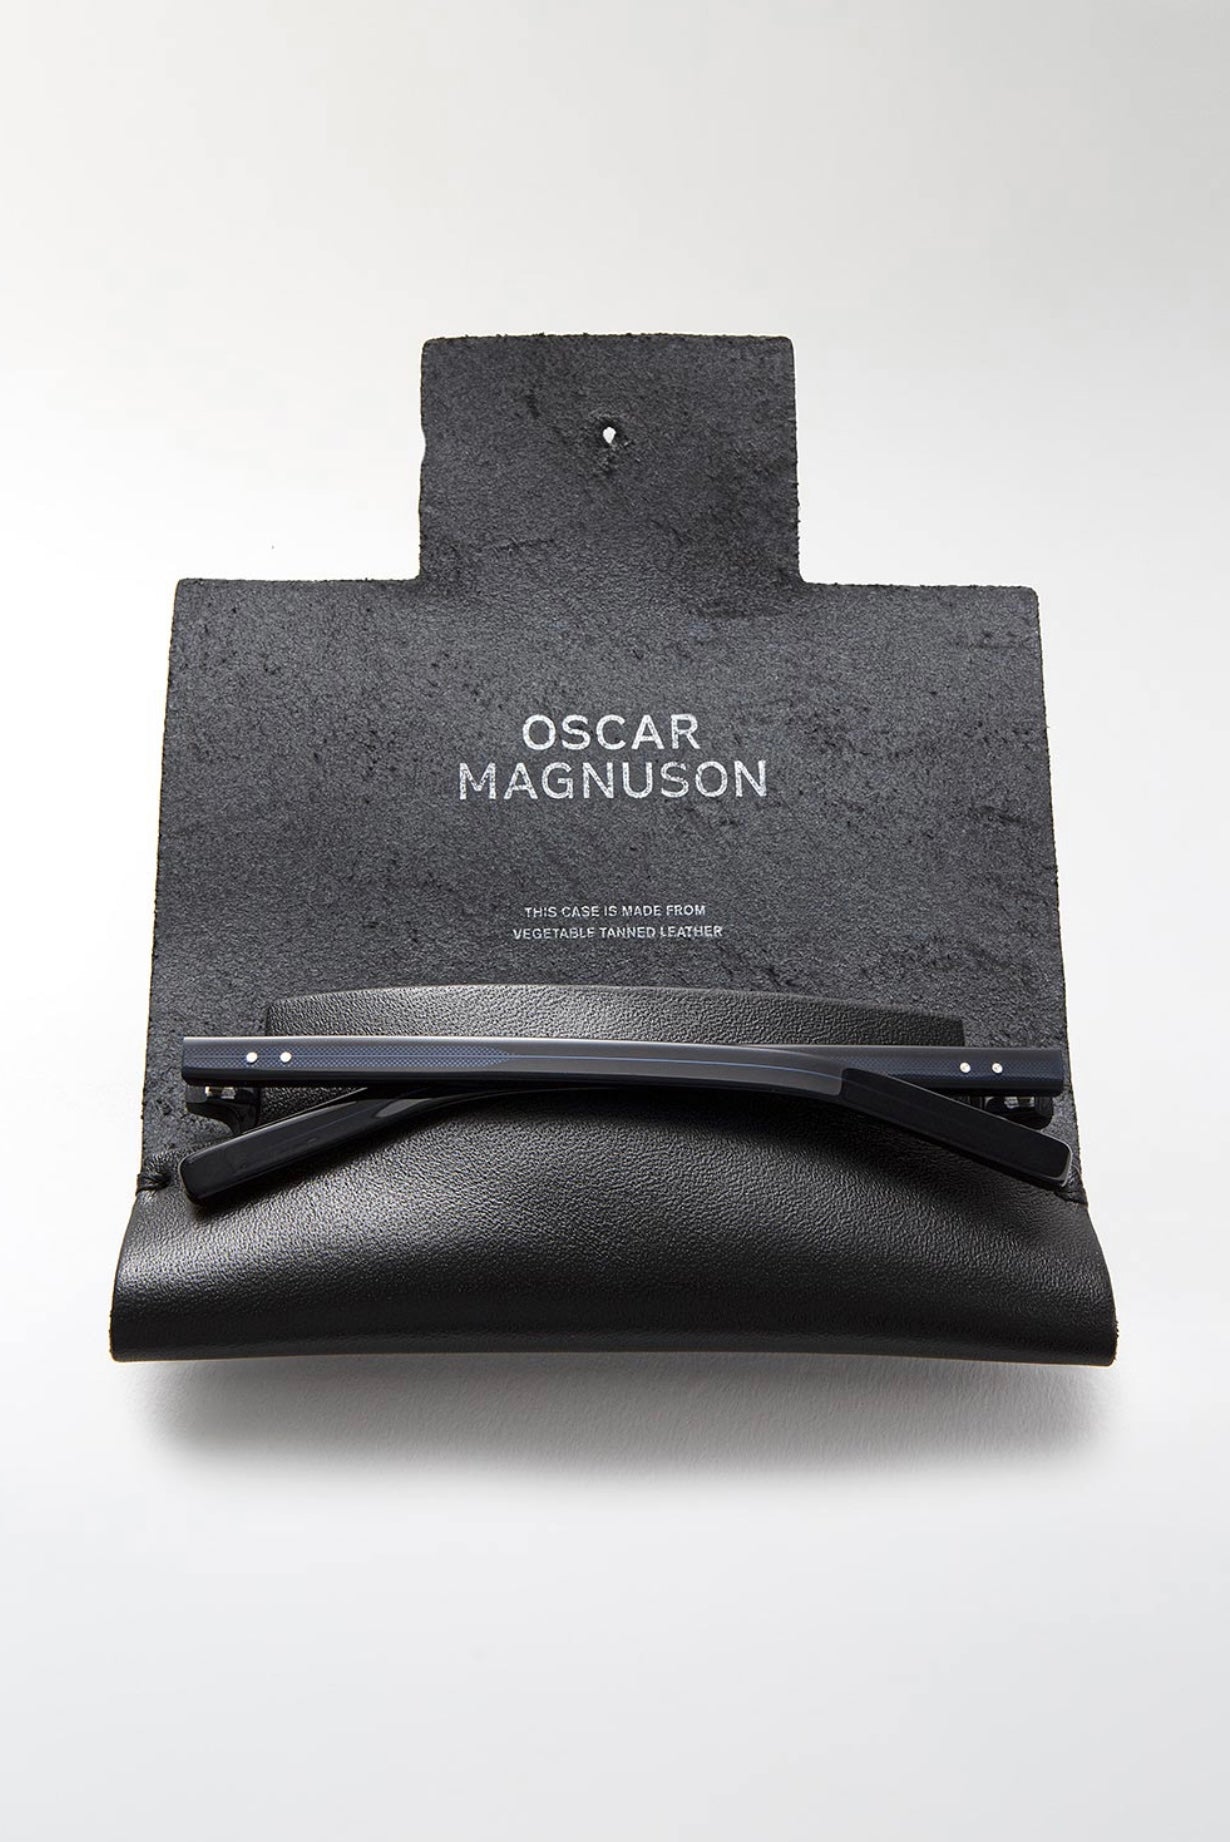 Oscar Magnuson - Sunglasses Gaff OM5 Deep Ink